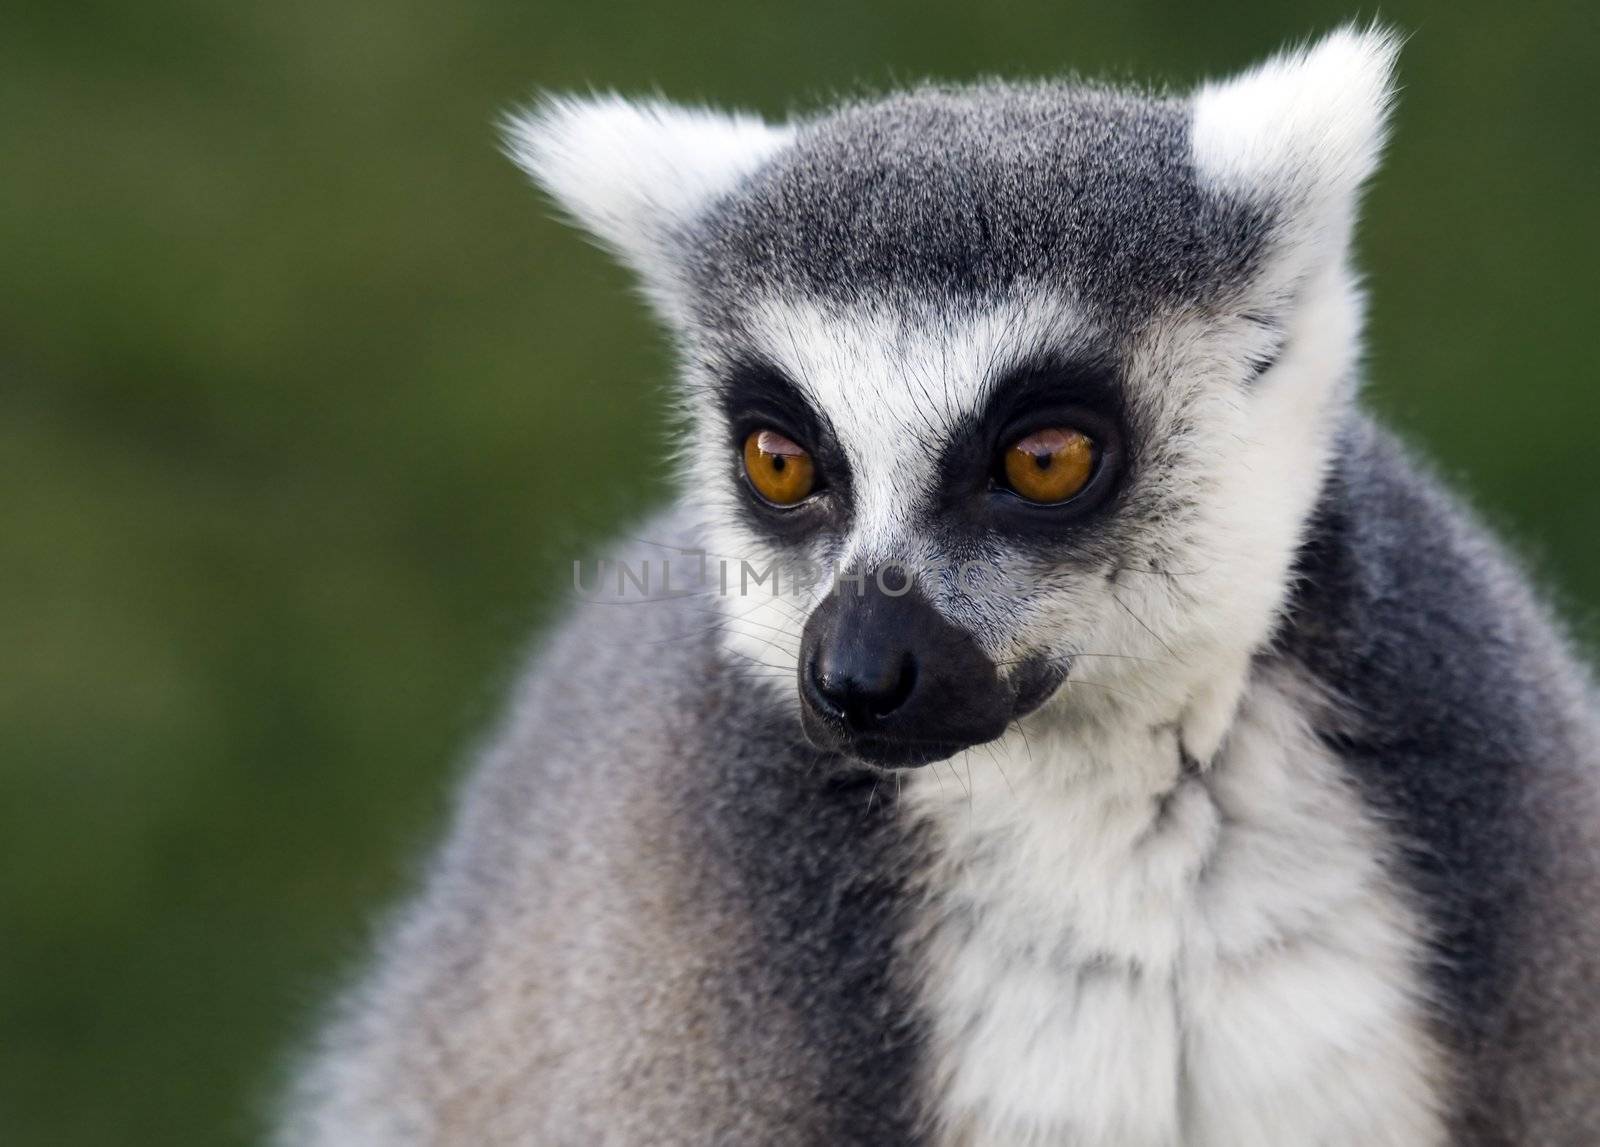 a cute lemur